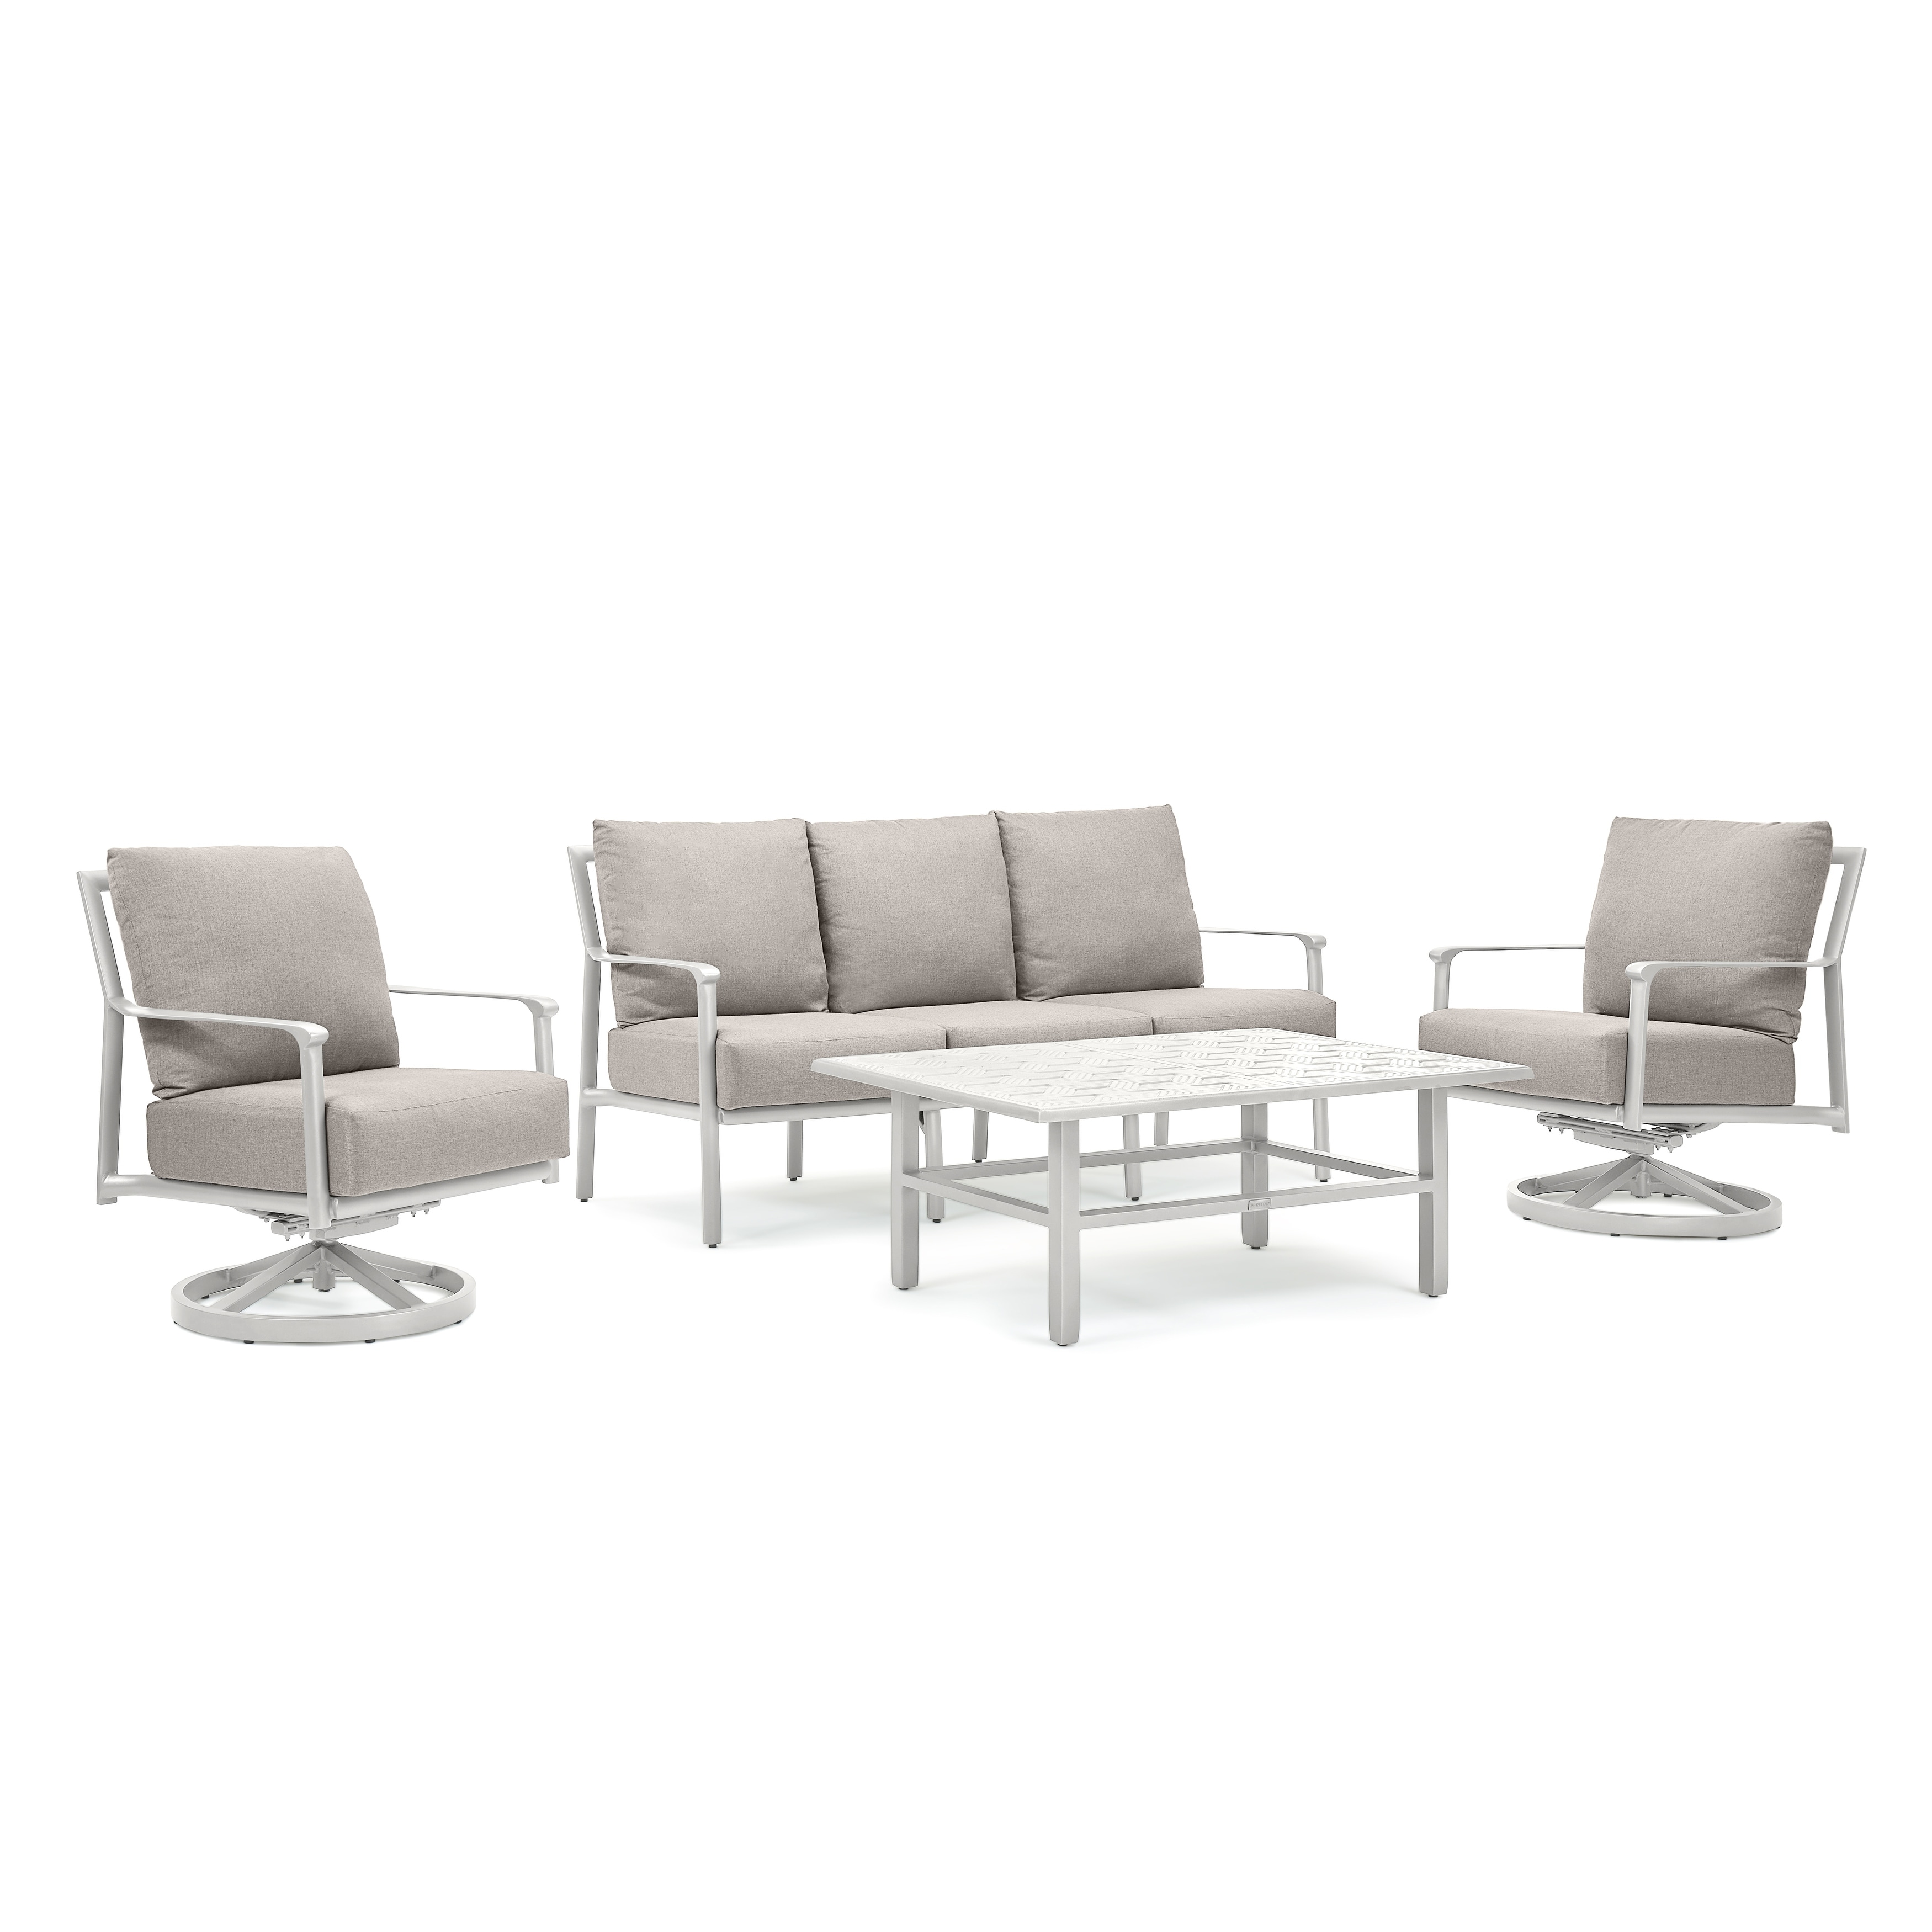 Aspen Cushion 4 Piece Seating Set With 2 Swivel Rocker Lounge Chairs  Sofa  Coffee Table